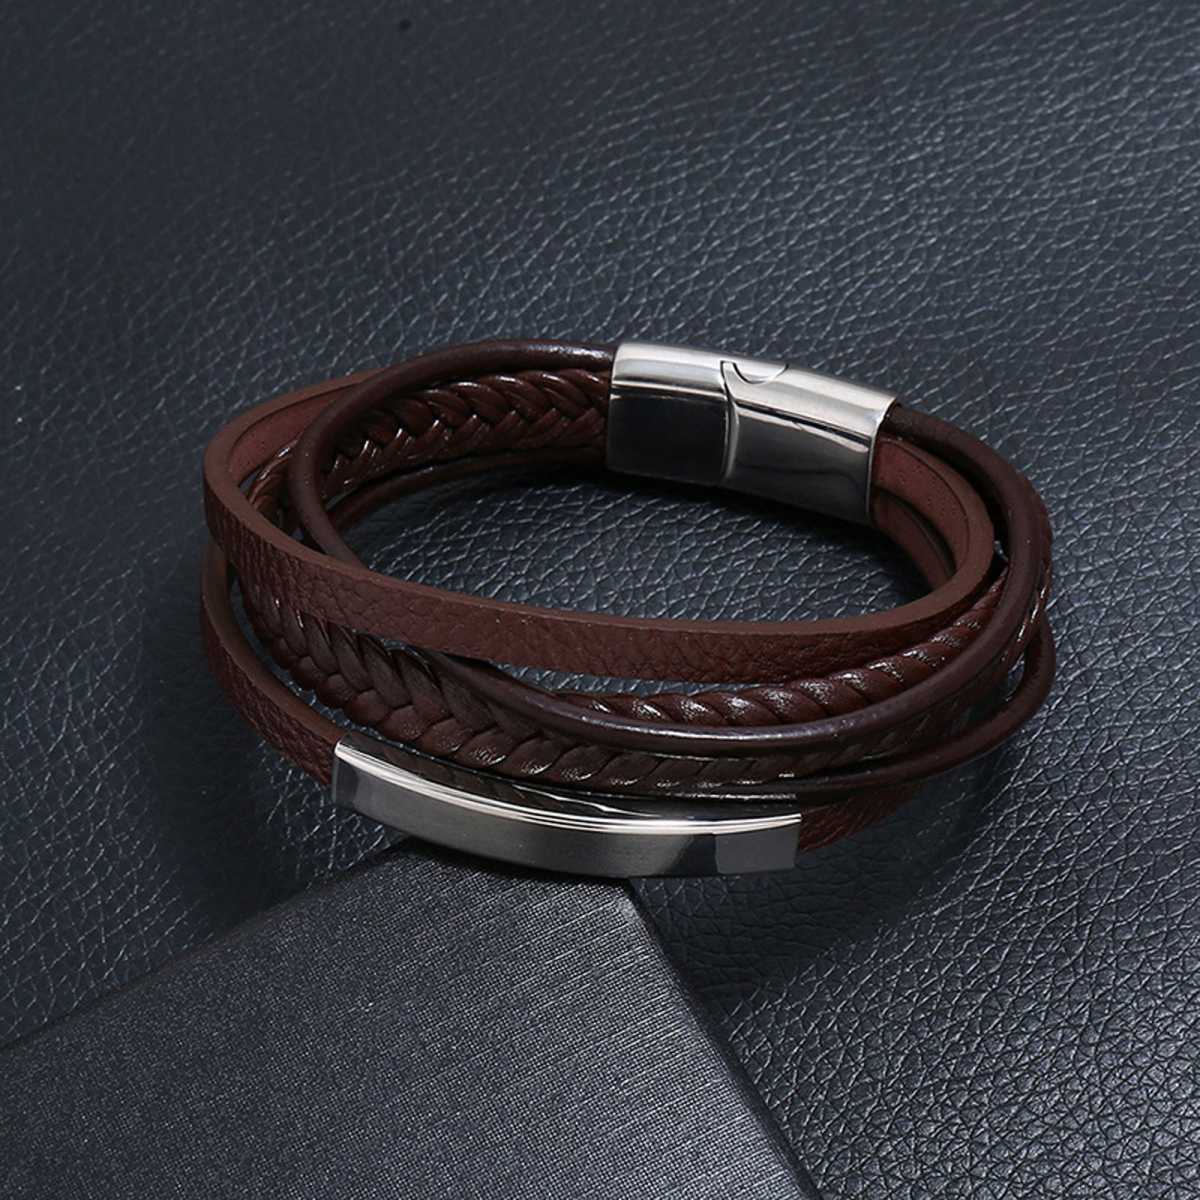 https://malis.ca/854-home_default/engravename-leather-bracelet-mali-s-canadian-jewellery.jpg